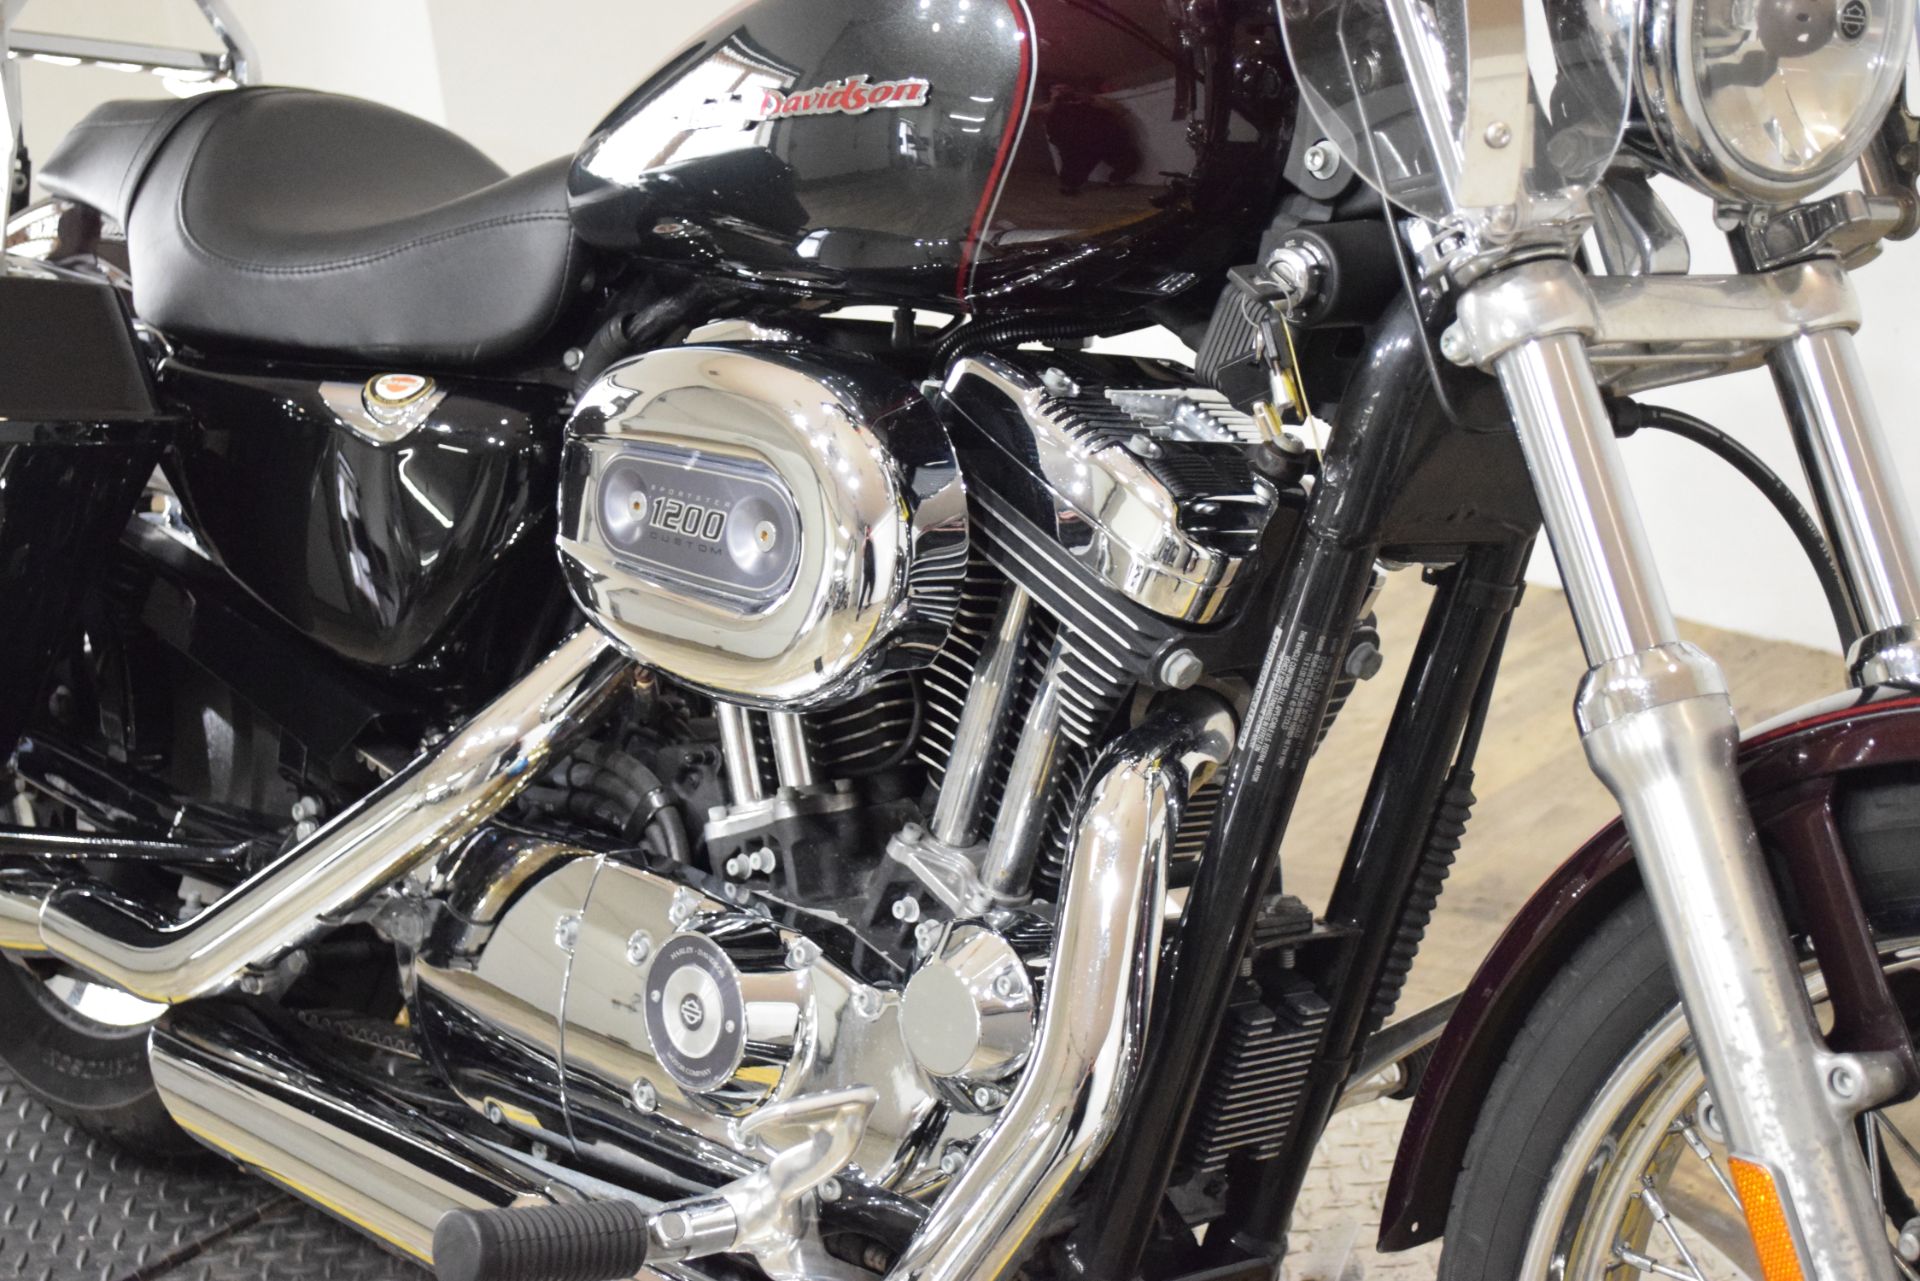 2005 Harley-Davidson Sportster® XL 1200 Custom in Wauconda, Illinois - Photo 4